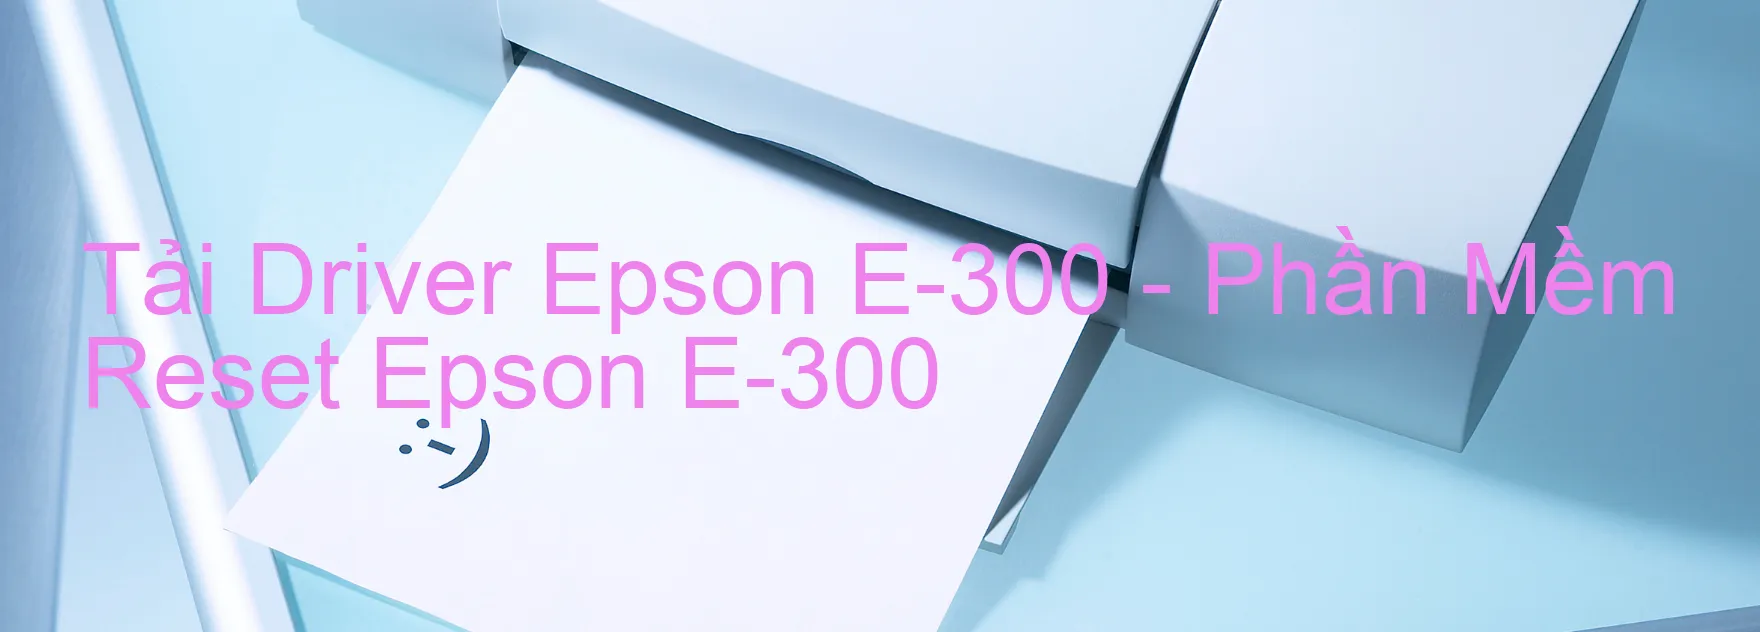 Driver Epson E-300, Phần Mềm Reset Epson E-300